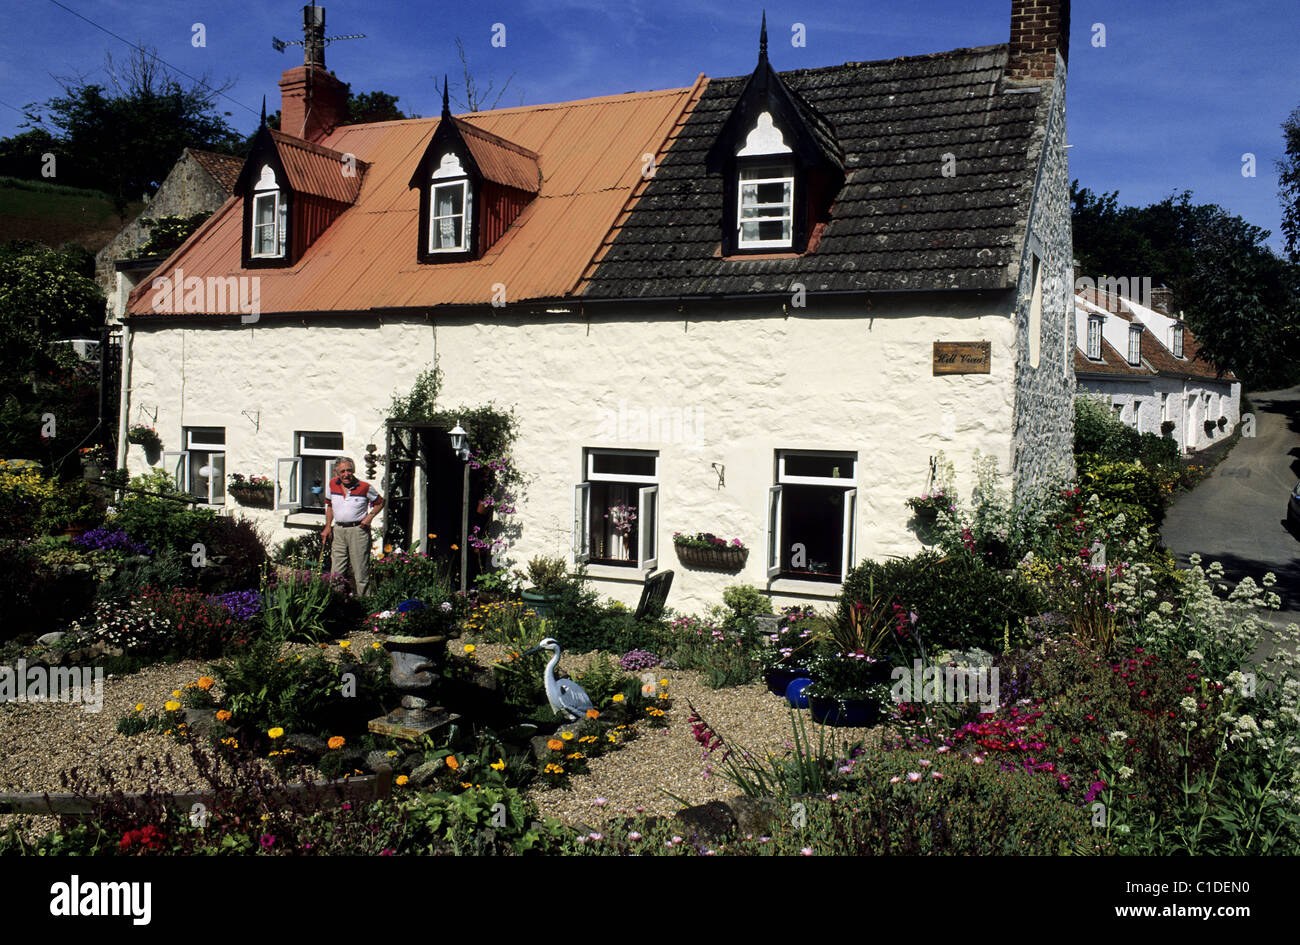 United Kingdom Channel Islands Guernsey Island Typical Cottage